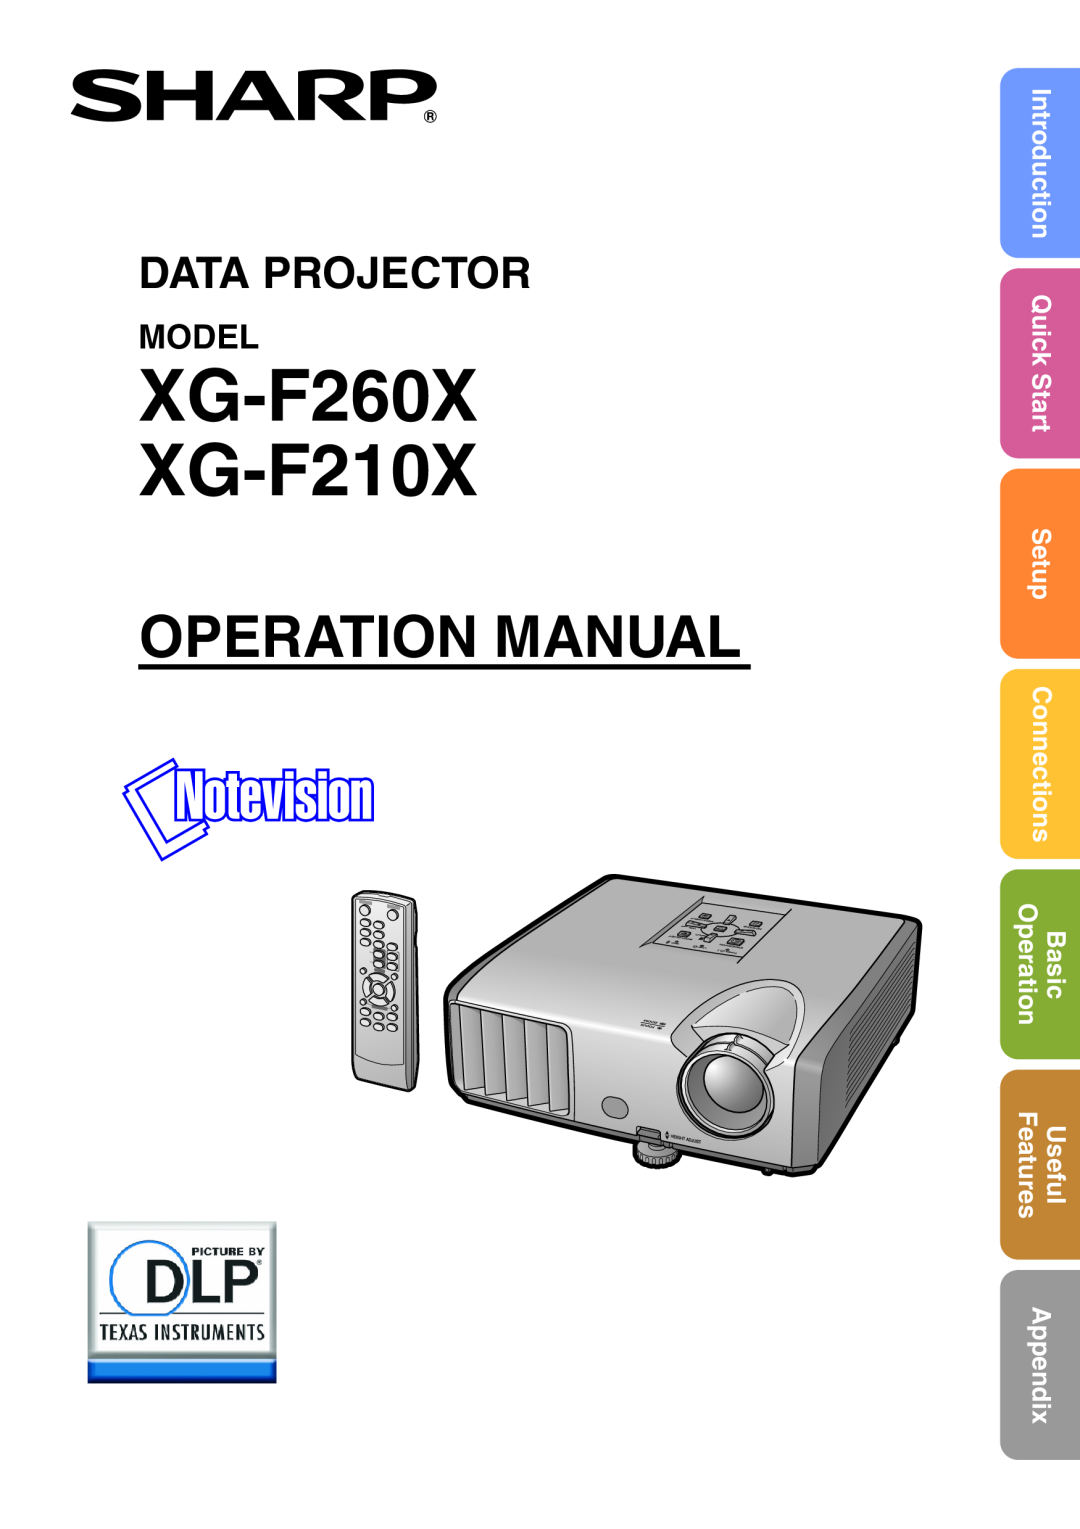 Sharp operation manual Model, XG-F260X XG-F210X, Operation Manual, Data Projector, Setup, Basic, Features, Appendix 